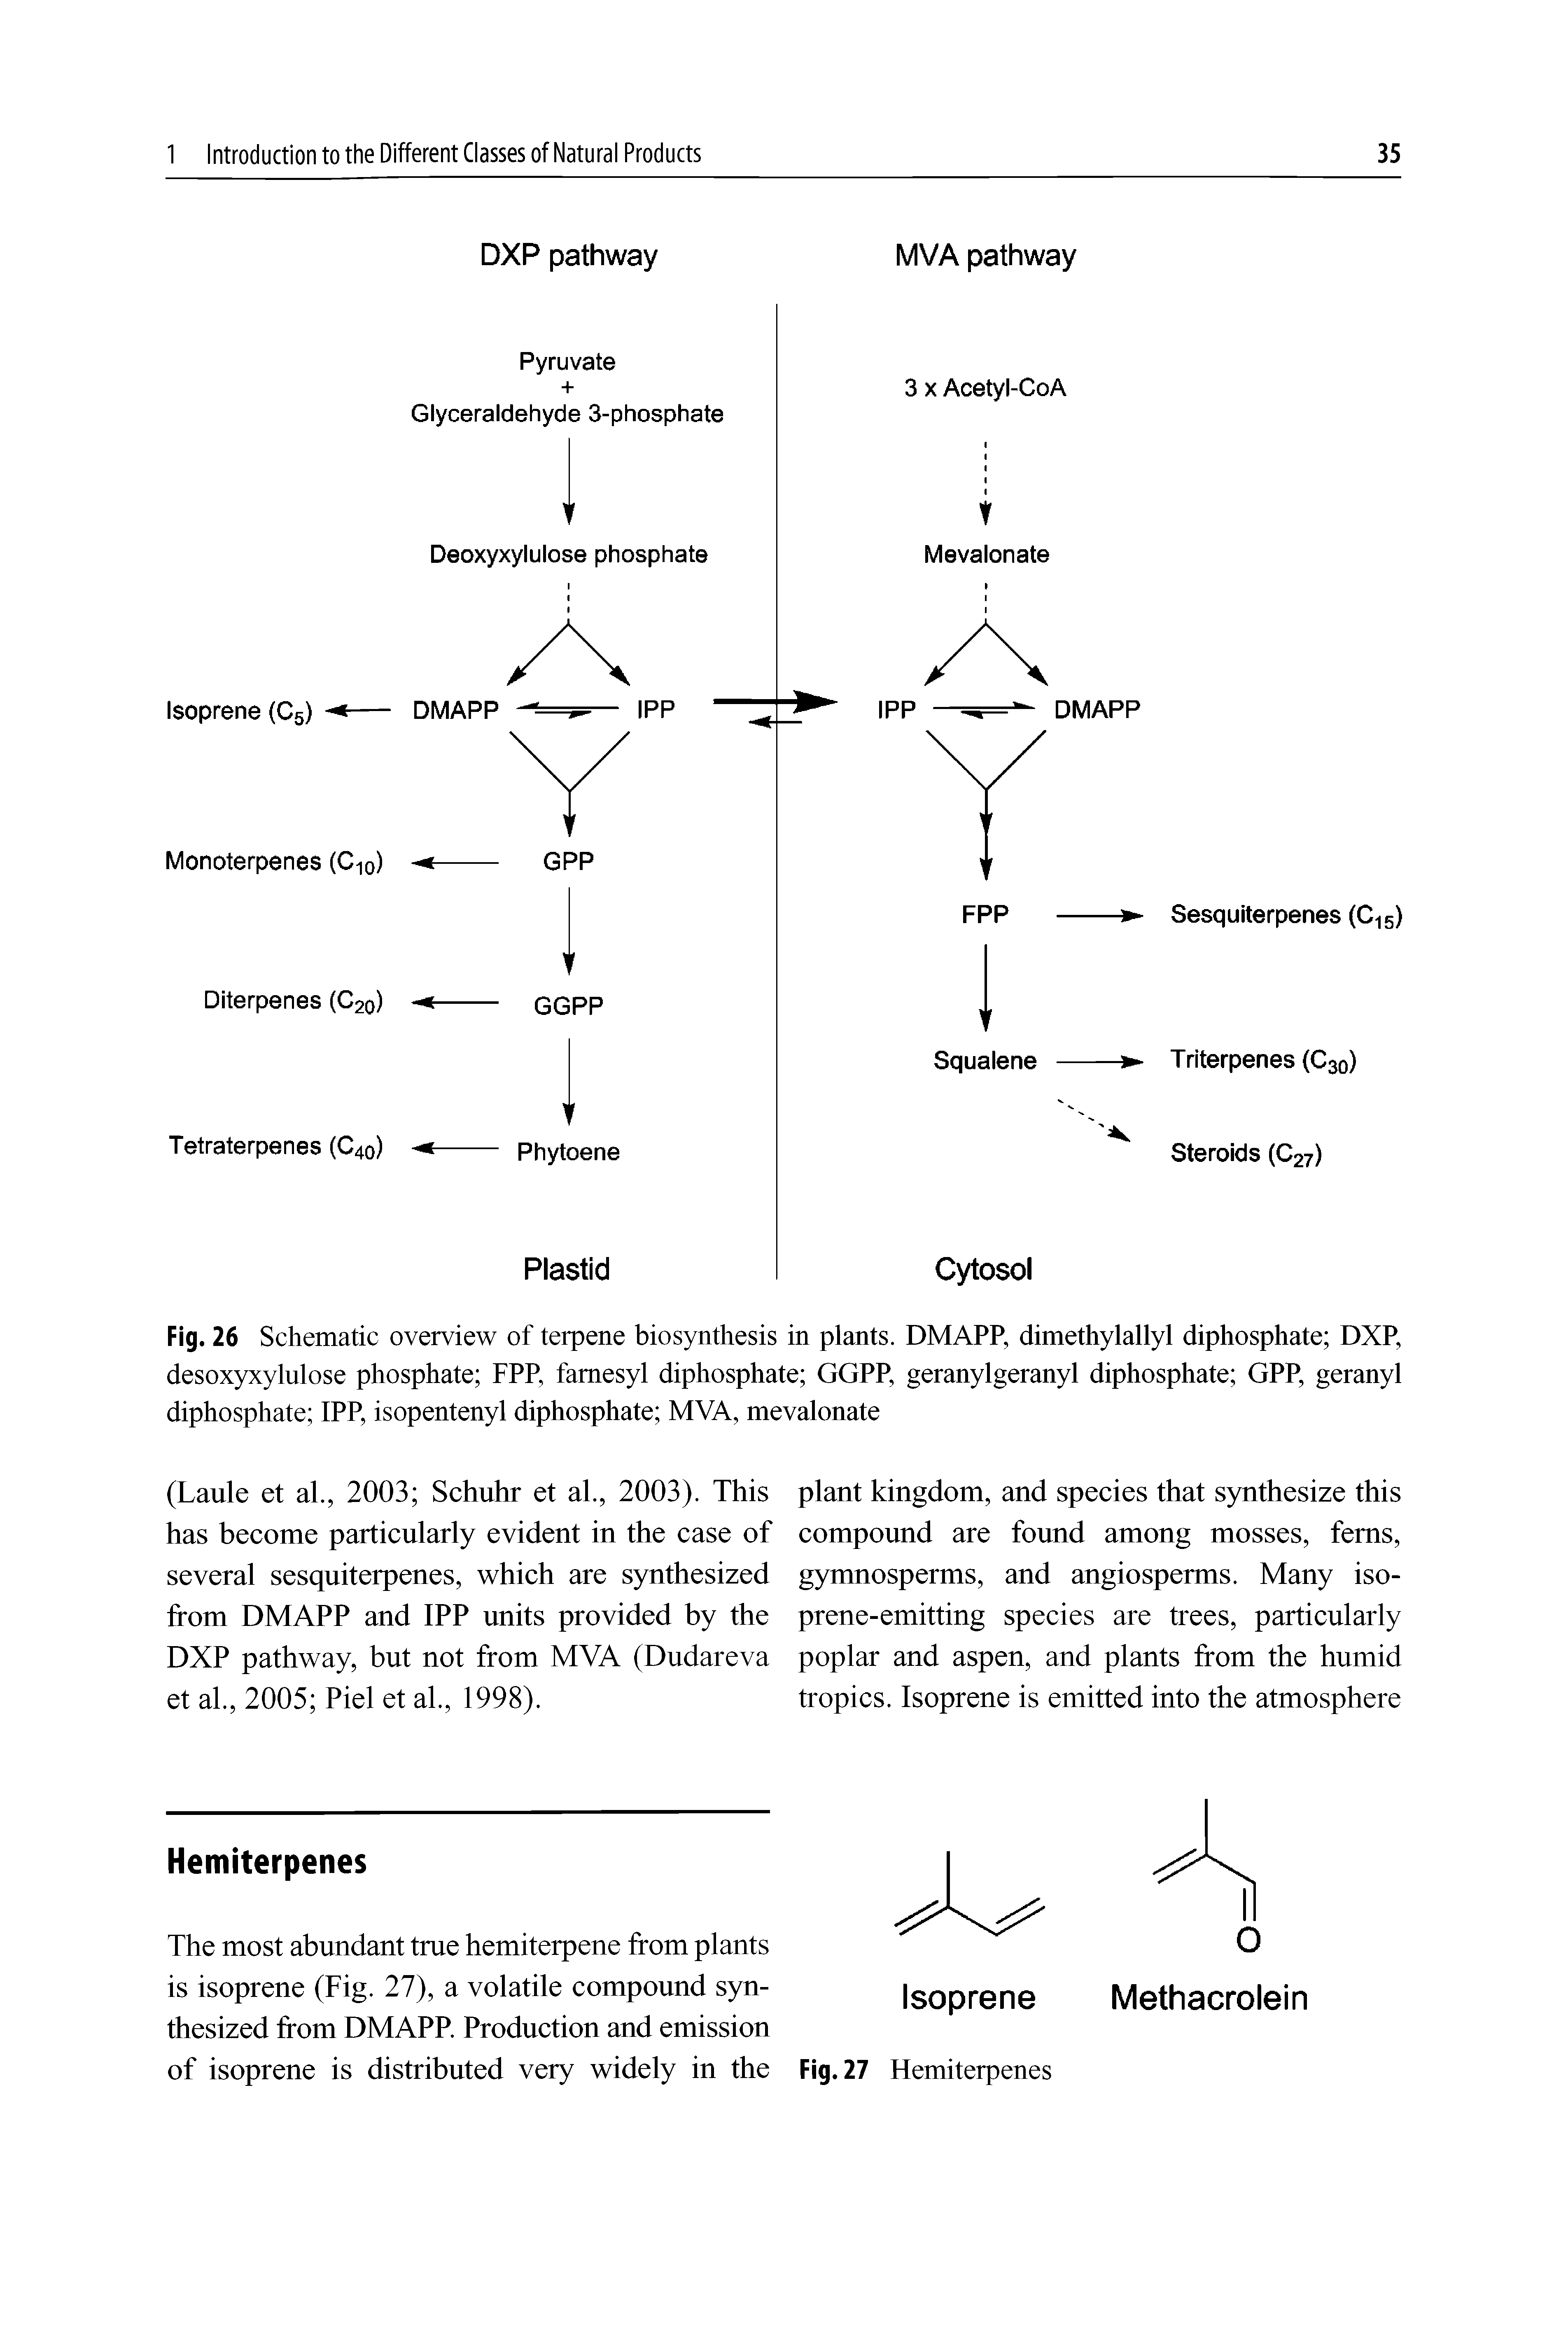 Fig. 26 Schematic overview of terpene biosynthesis in plants. DMAPP, dimethylallyl diphosphate DXP, desoxyxylulose phosphate FPP, famesyl diphosphate GGPP, geranylgeranyl diphosphate GPP, geranyl diphosphate IPP, isopentenyl diphosphate MVA, mevalonate...